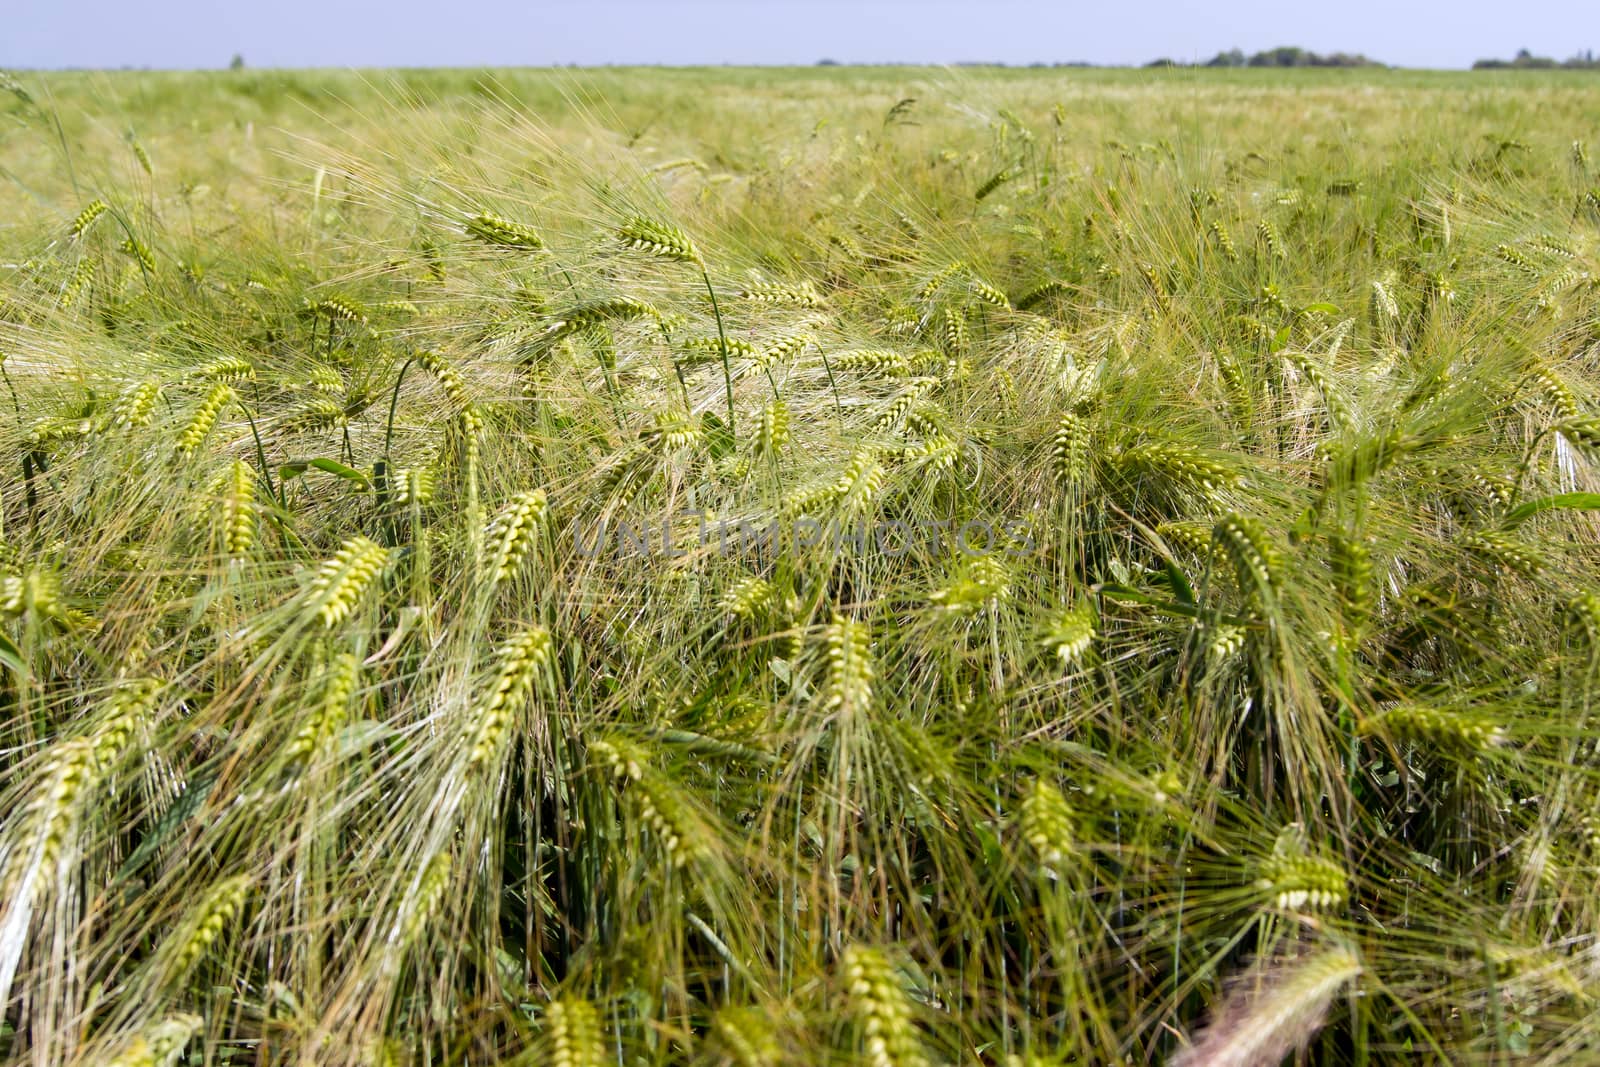 Winter barley yellow field before full maturation.